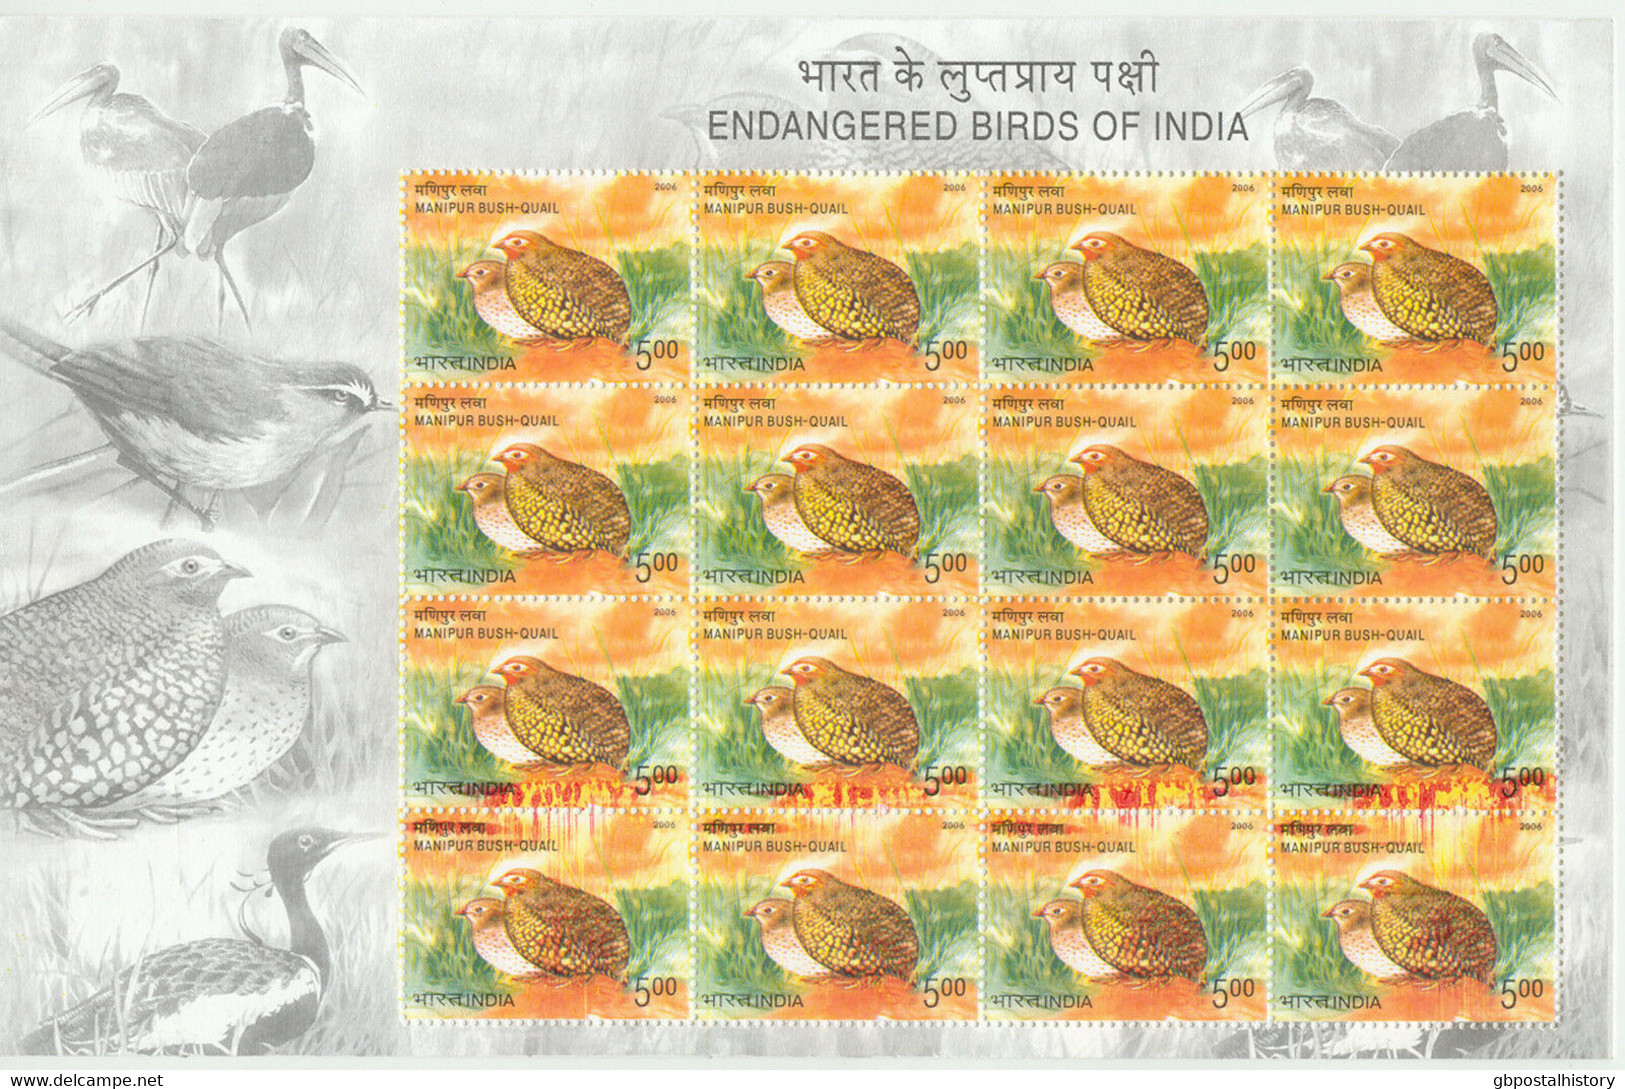 INDIA 2006 Birds - Manipur Bush-Quail, U/M MS (4 X 4stamps) 5 R. MAJOR VARIETIES - Errors, Freaks & Oddities (EFO)